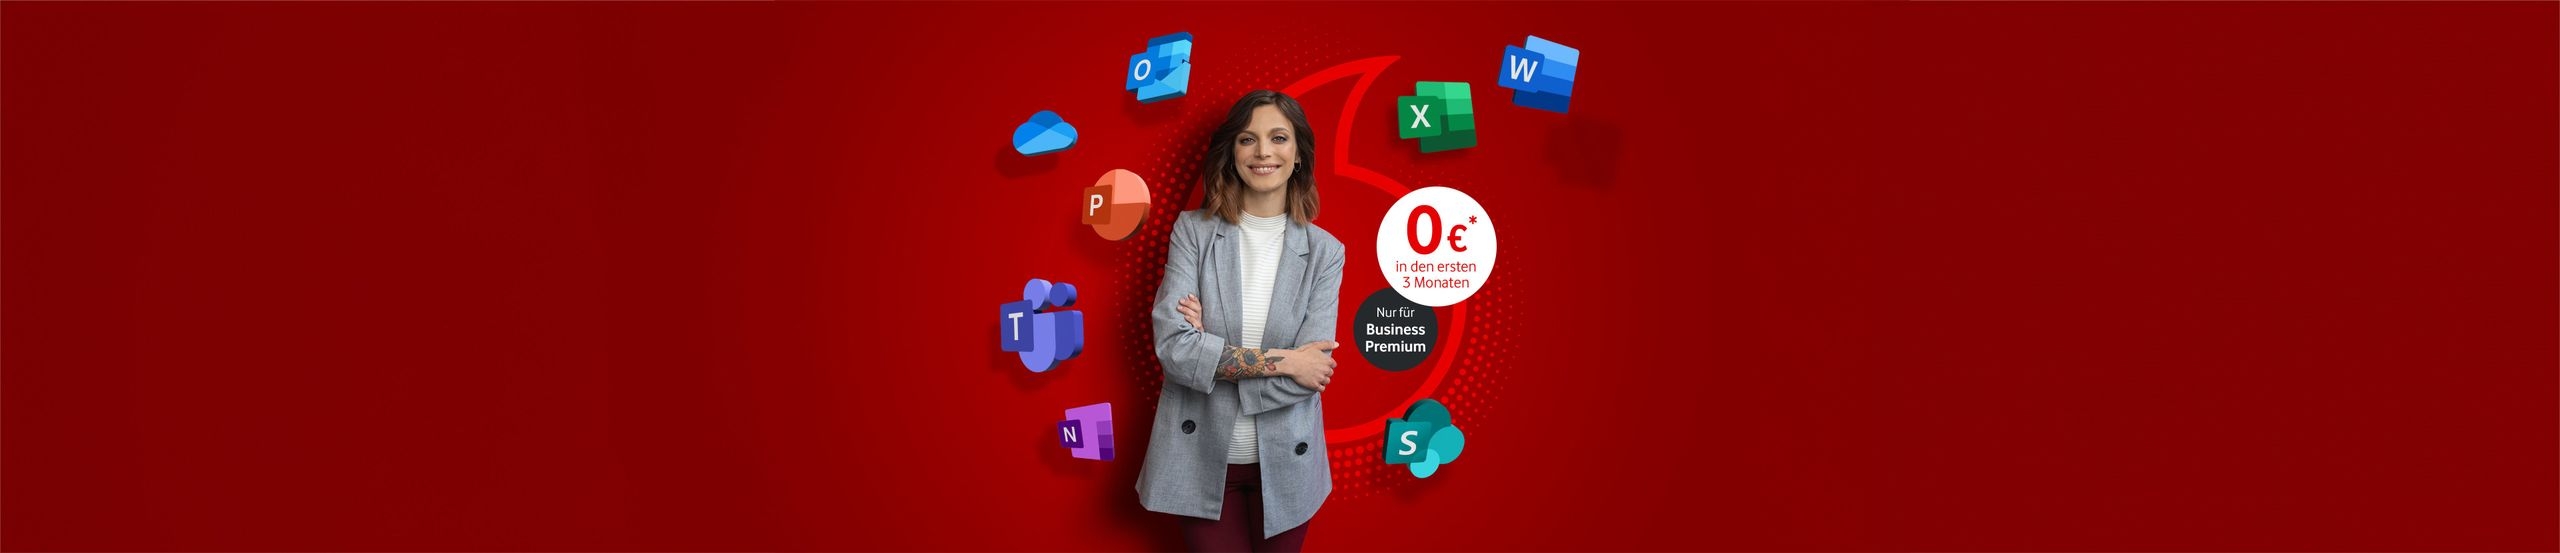 Microsoft 365 Business mit Vodafone Services Promo-Banner